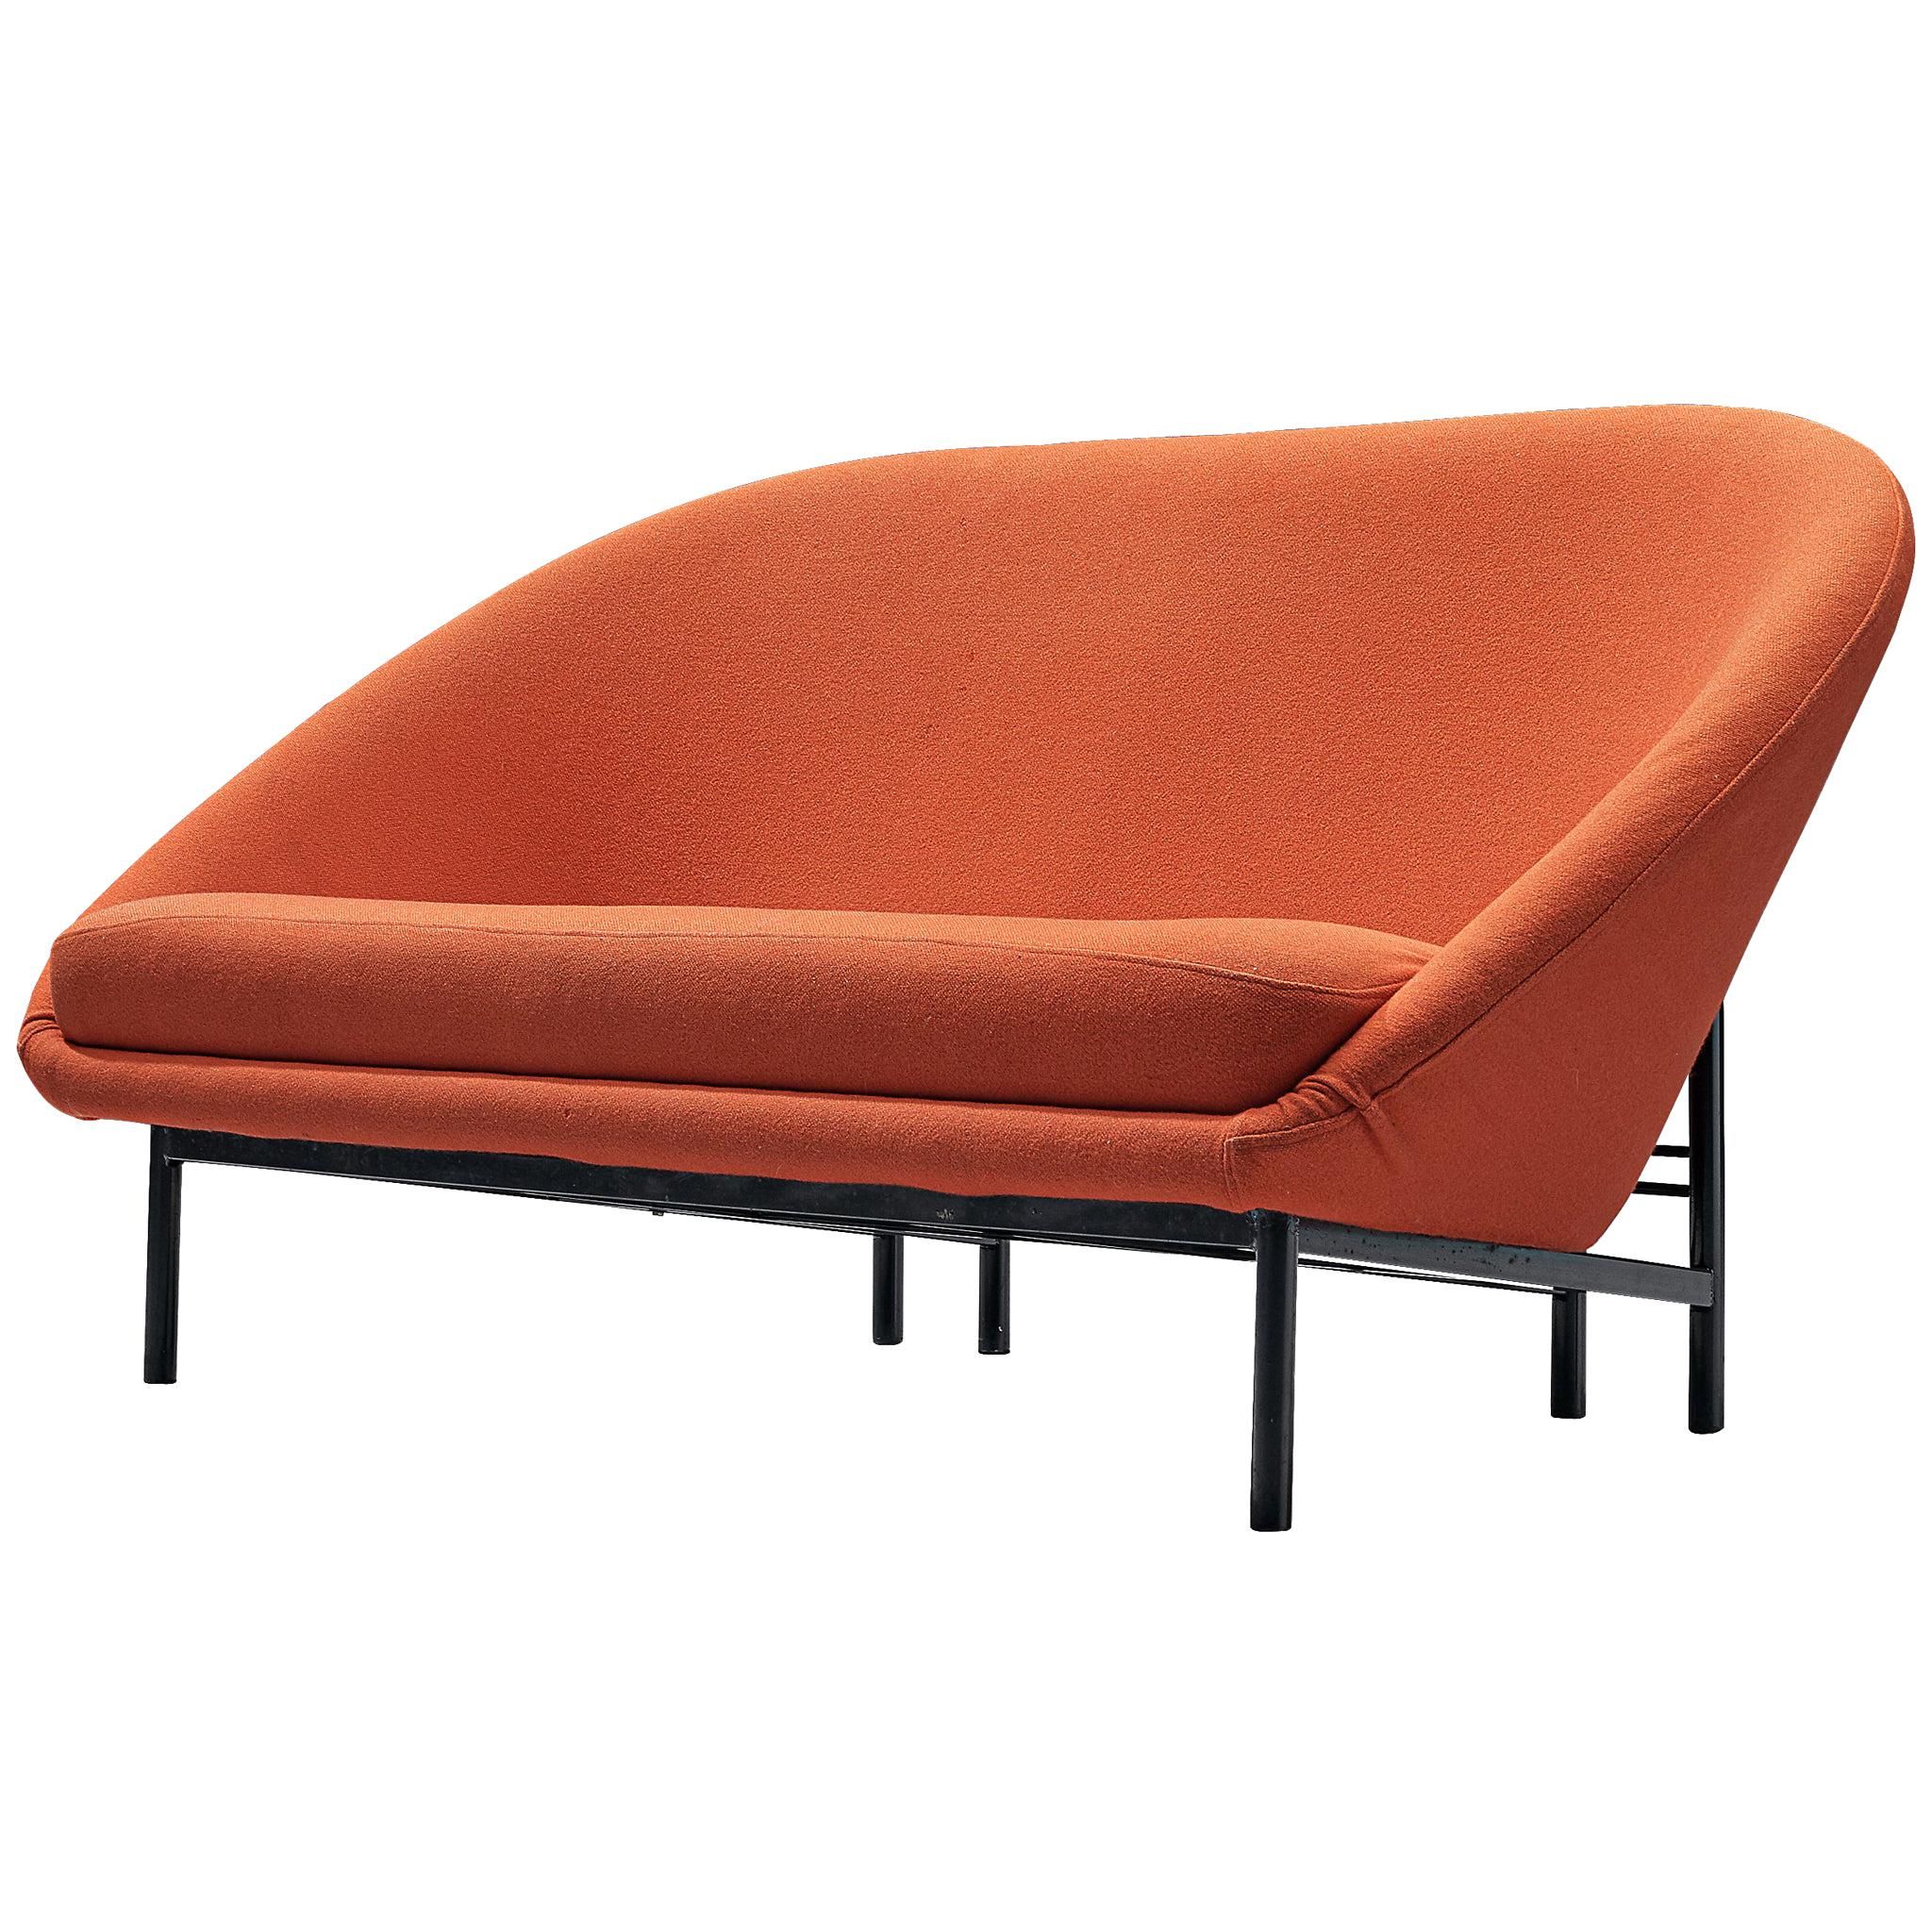 Theo Ruth for Artifort Orange Sofa